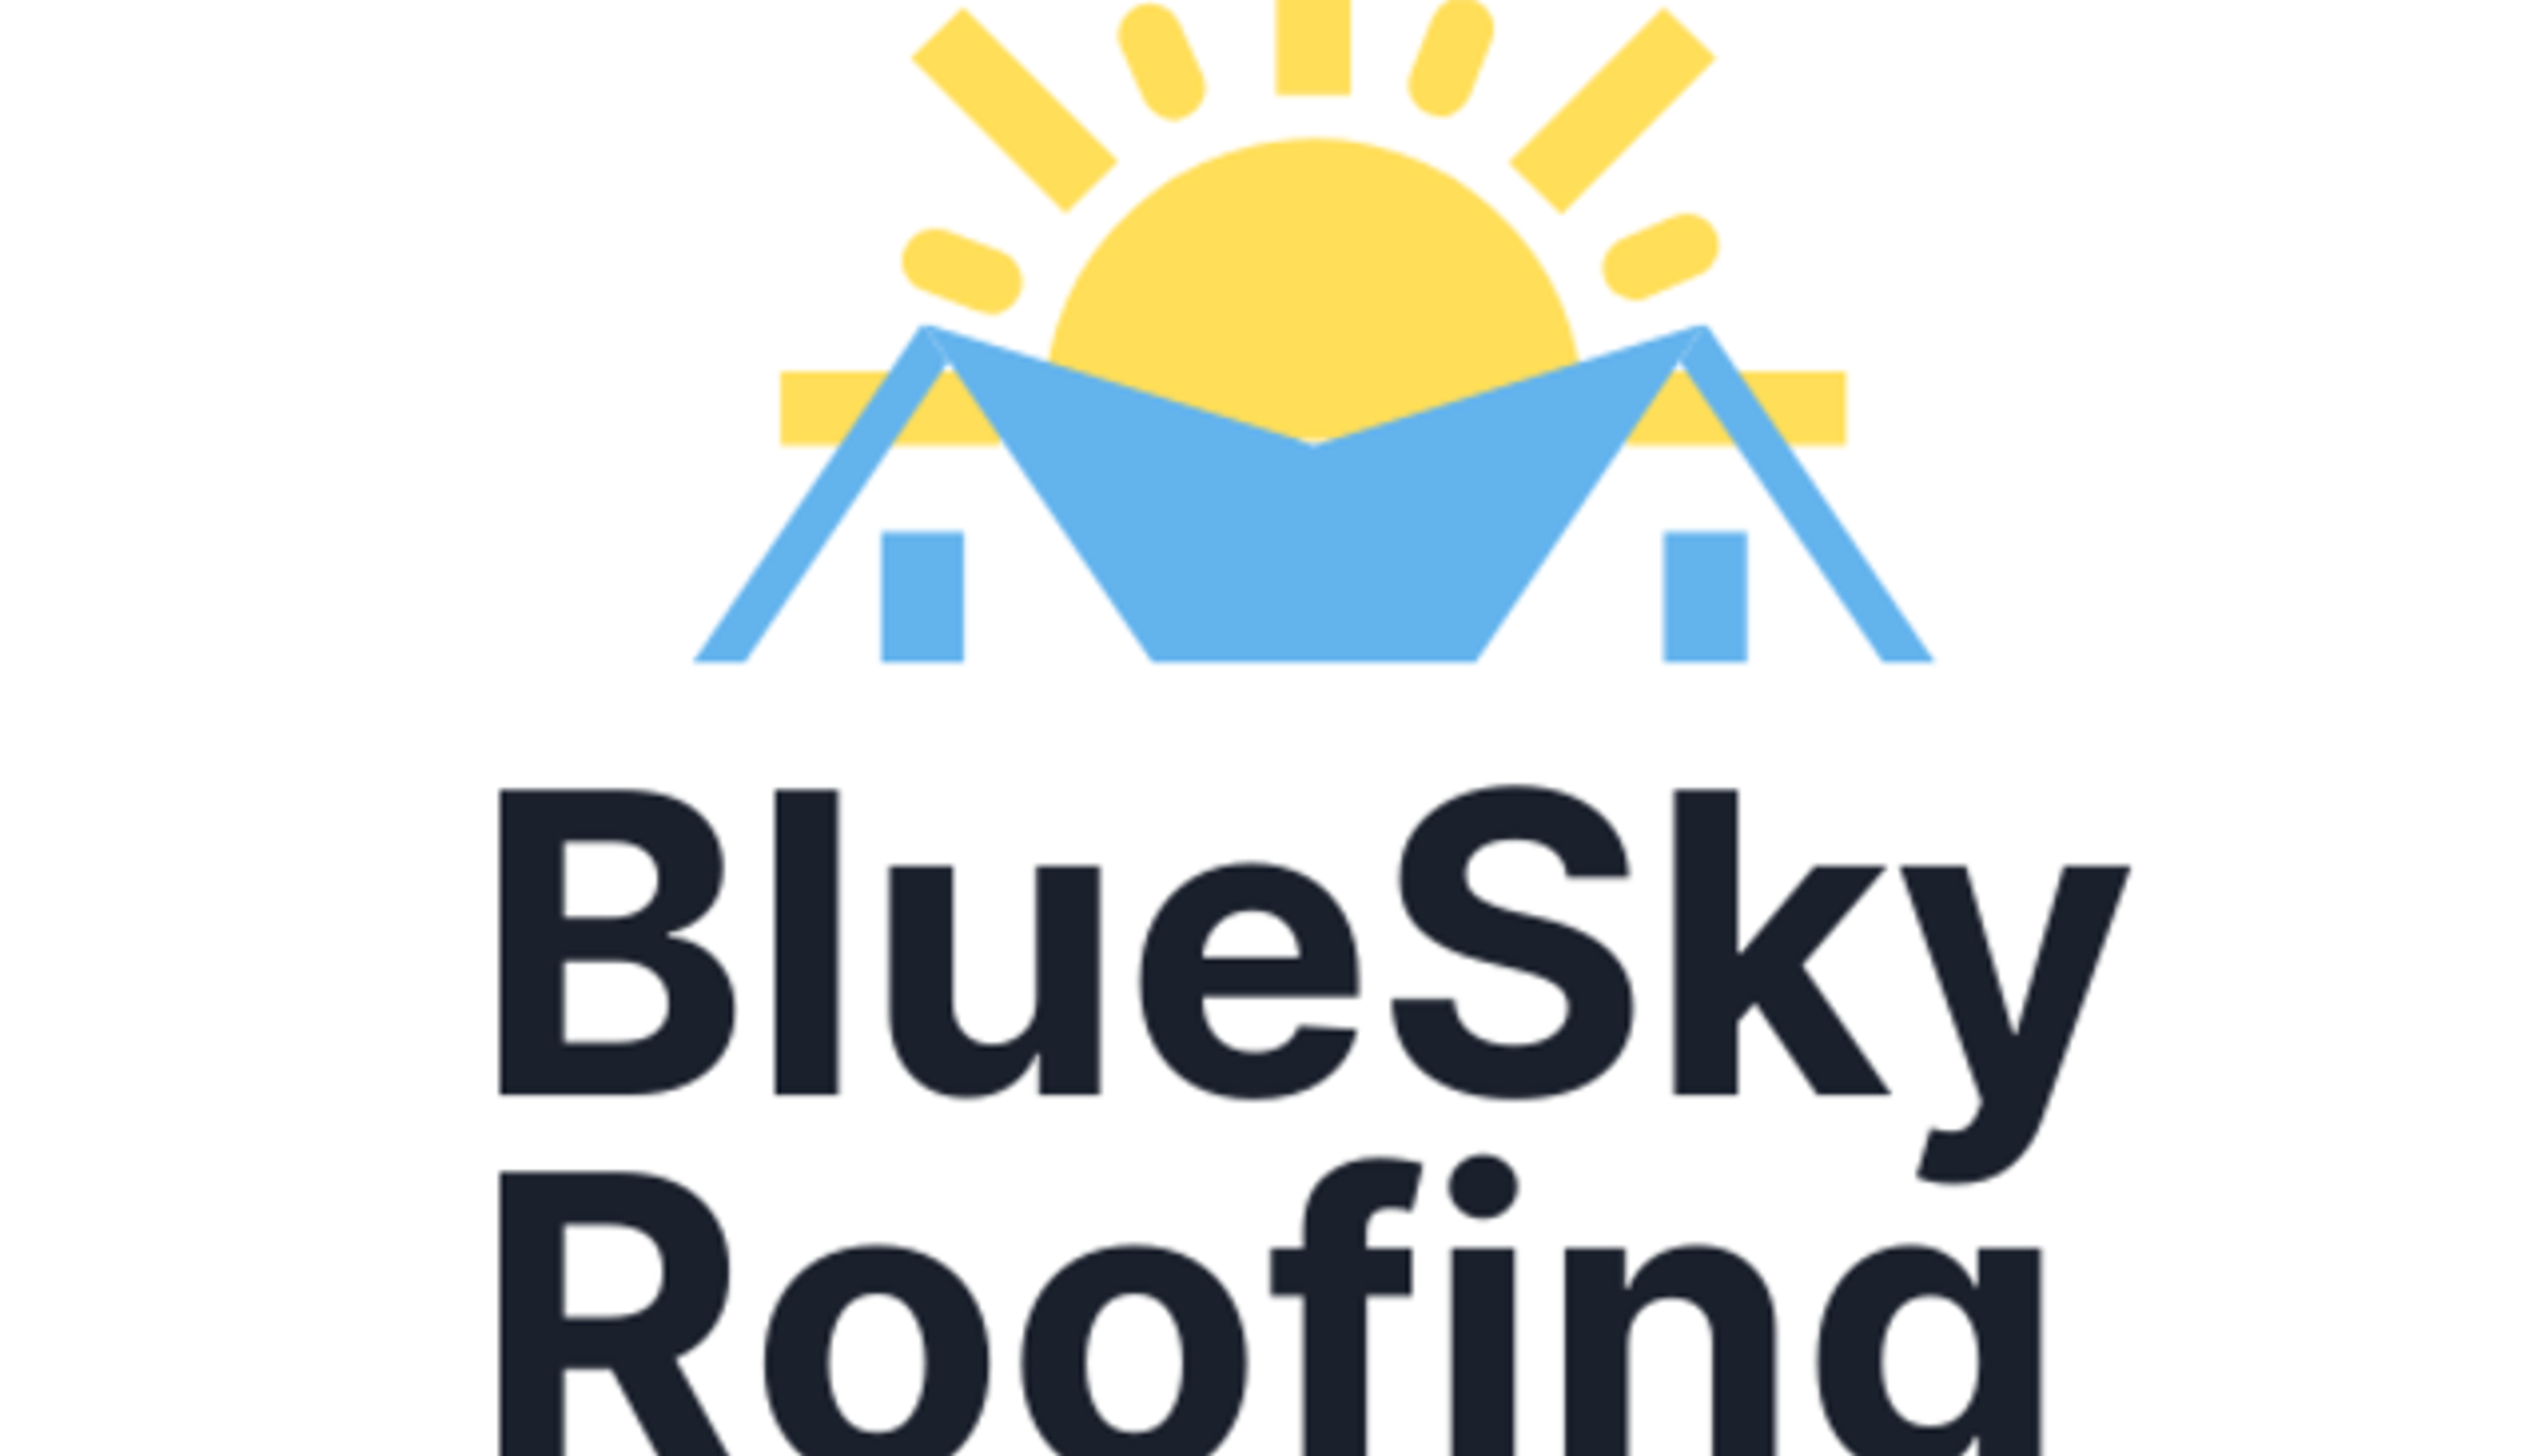 Blue Sky Roofing logo